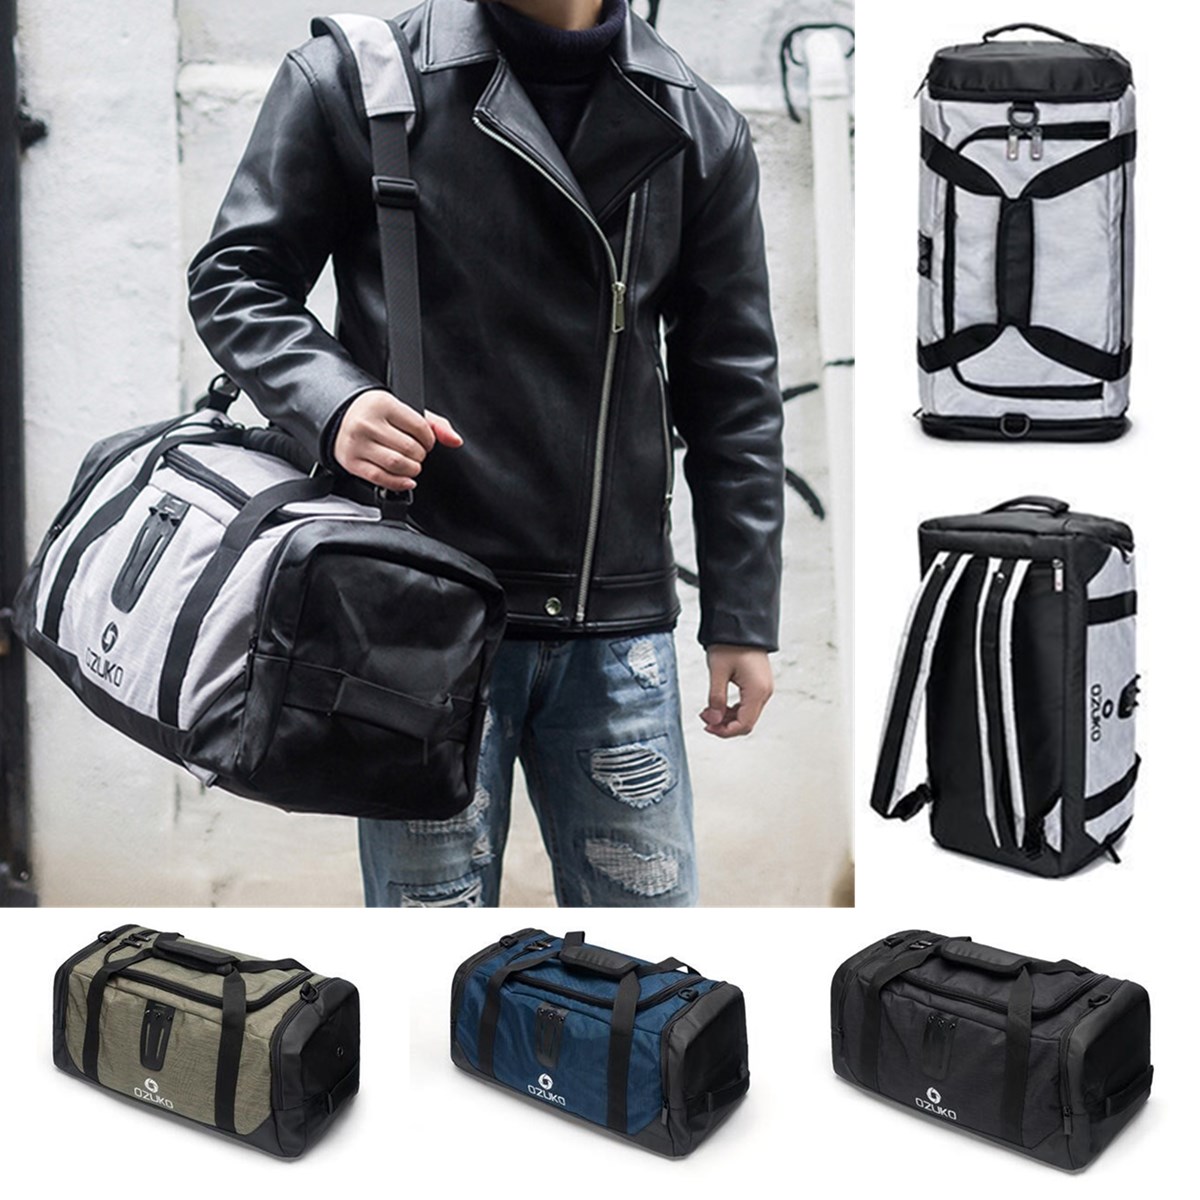 20inch-Men-Outdoor-Gym-Bag-Travel-Sports-Handbag-Backpack-Shoes-Storage-Duffel-Rucksack-1322576-1